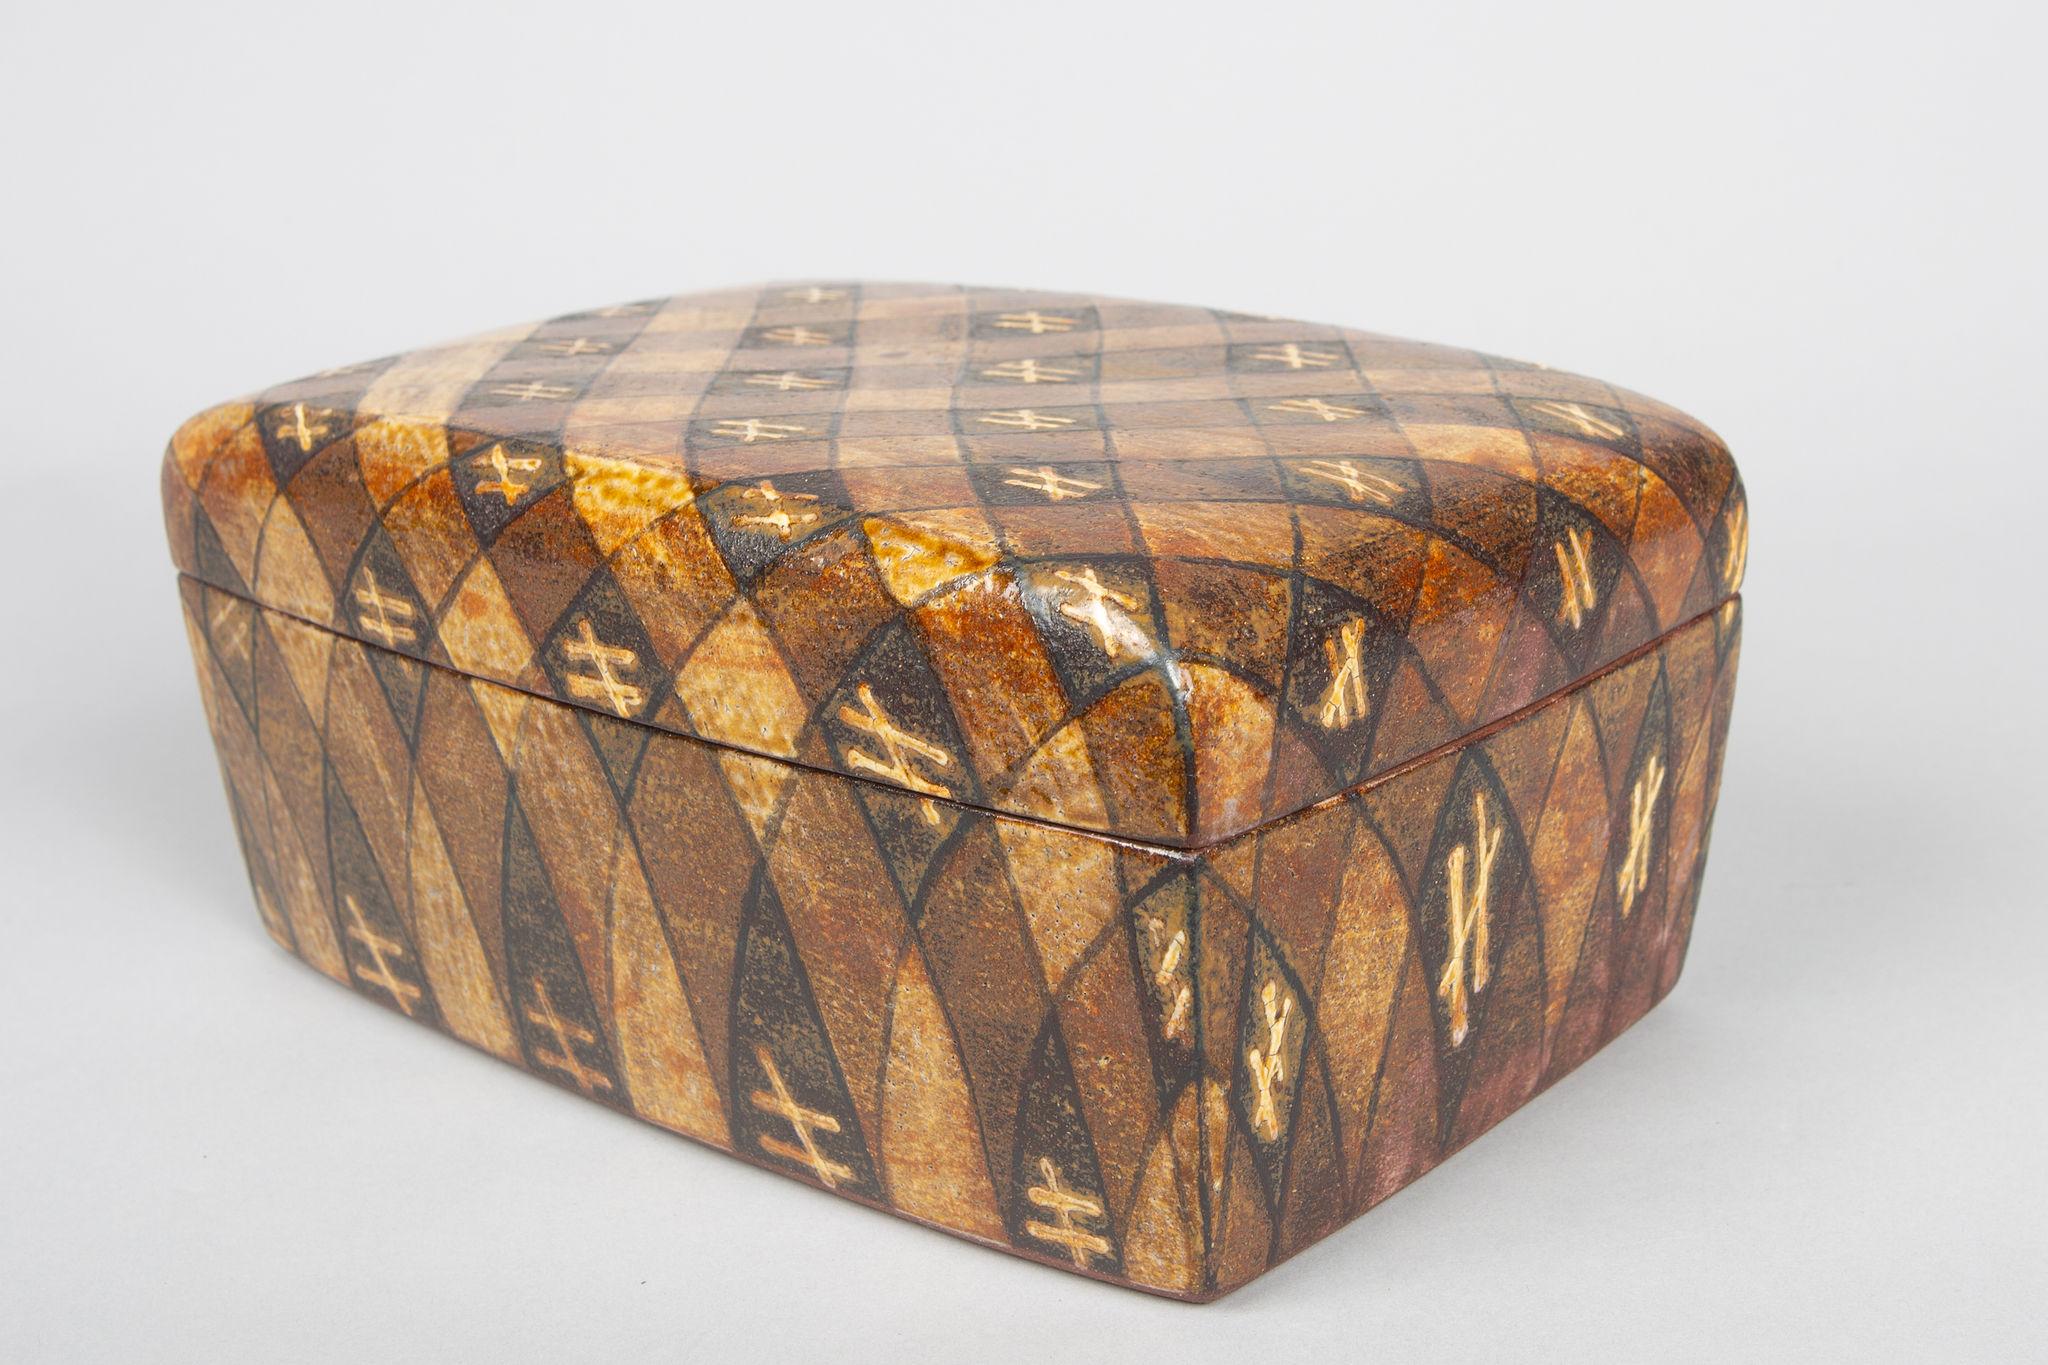 Showa period (1926-1989) box with continuous geometric plaid design. Signature reads: Dosen.